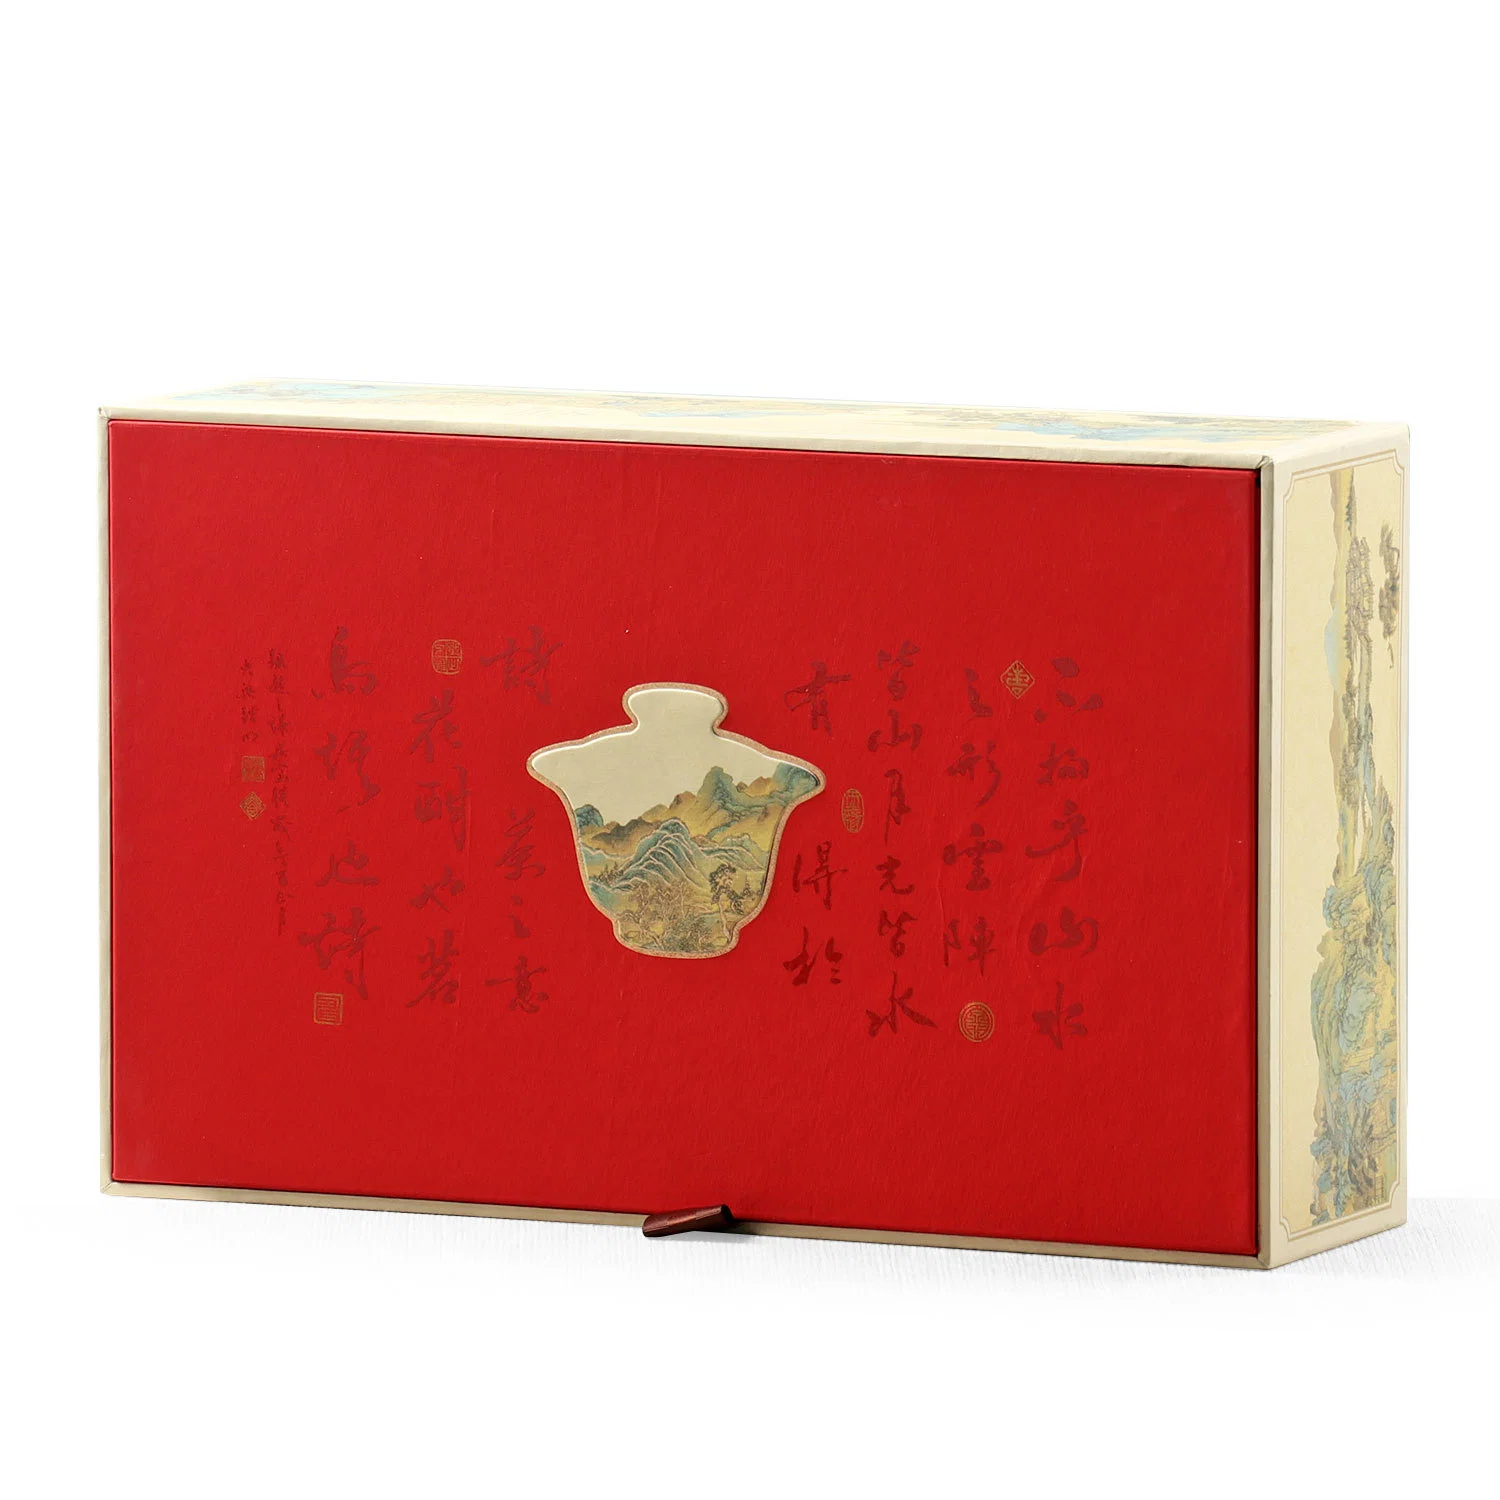 Al por mayor país de moda Caja simple té hojas de embalaje de caja